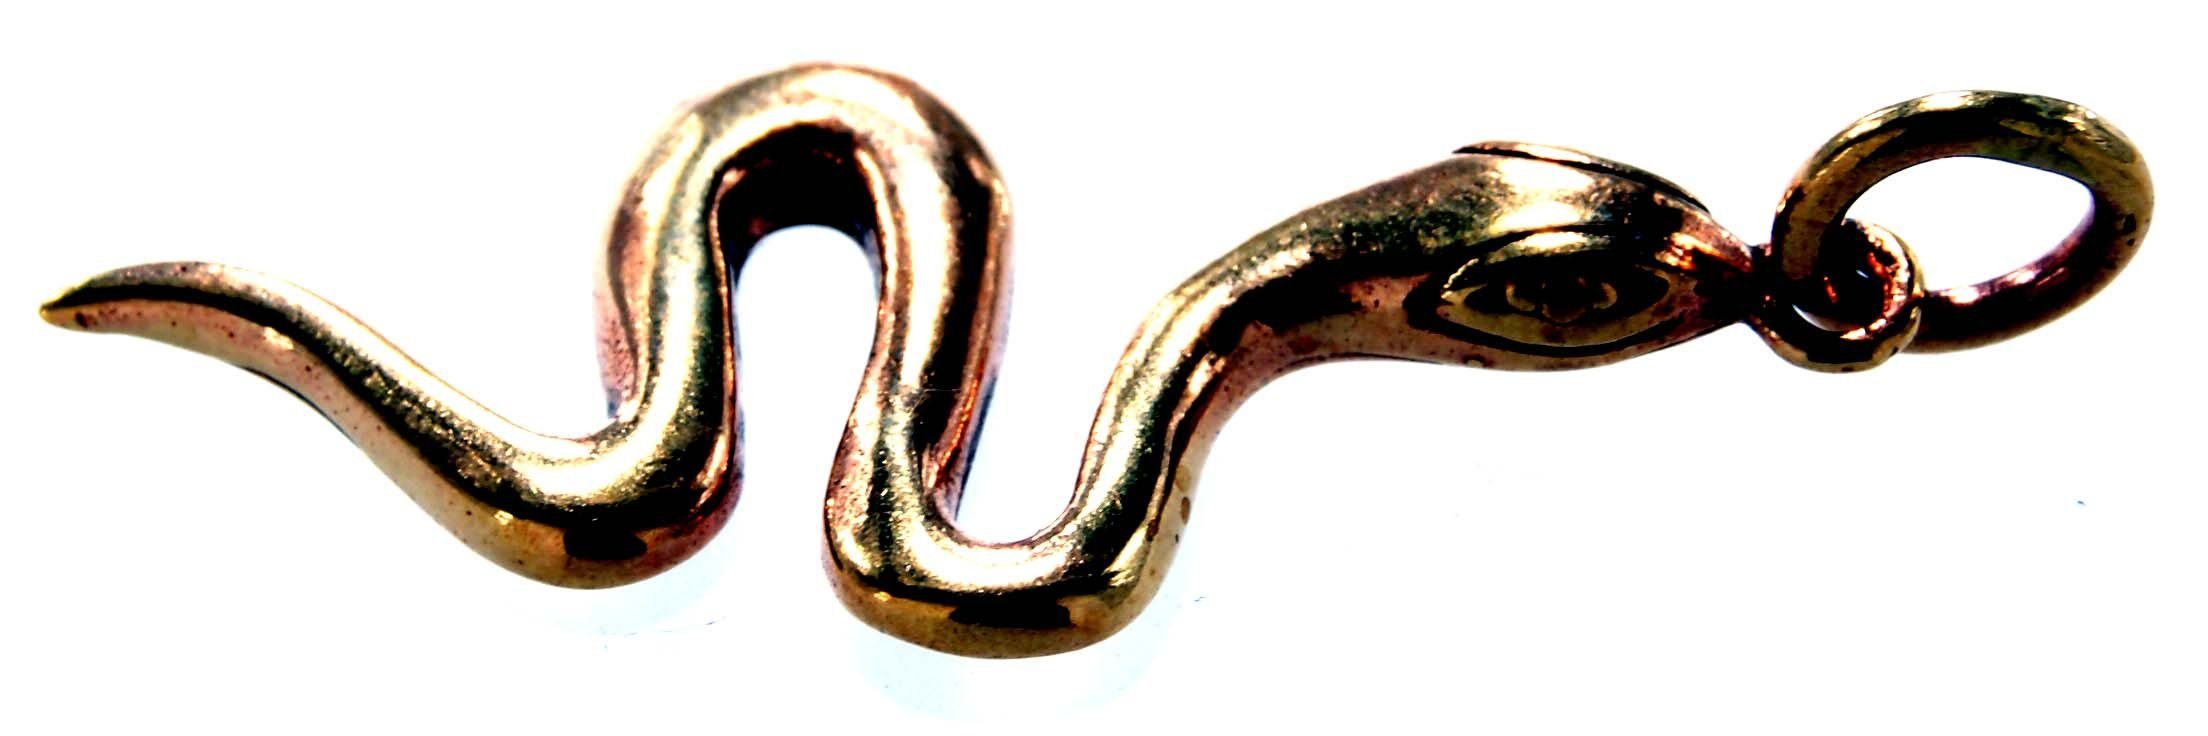 Bronze Gothic chlangen Kettenanhänger Snake of Leather Metal Anhänger Kiss Schlange Kette